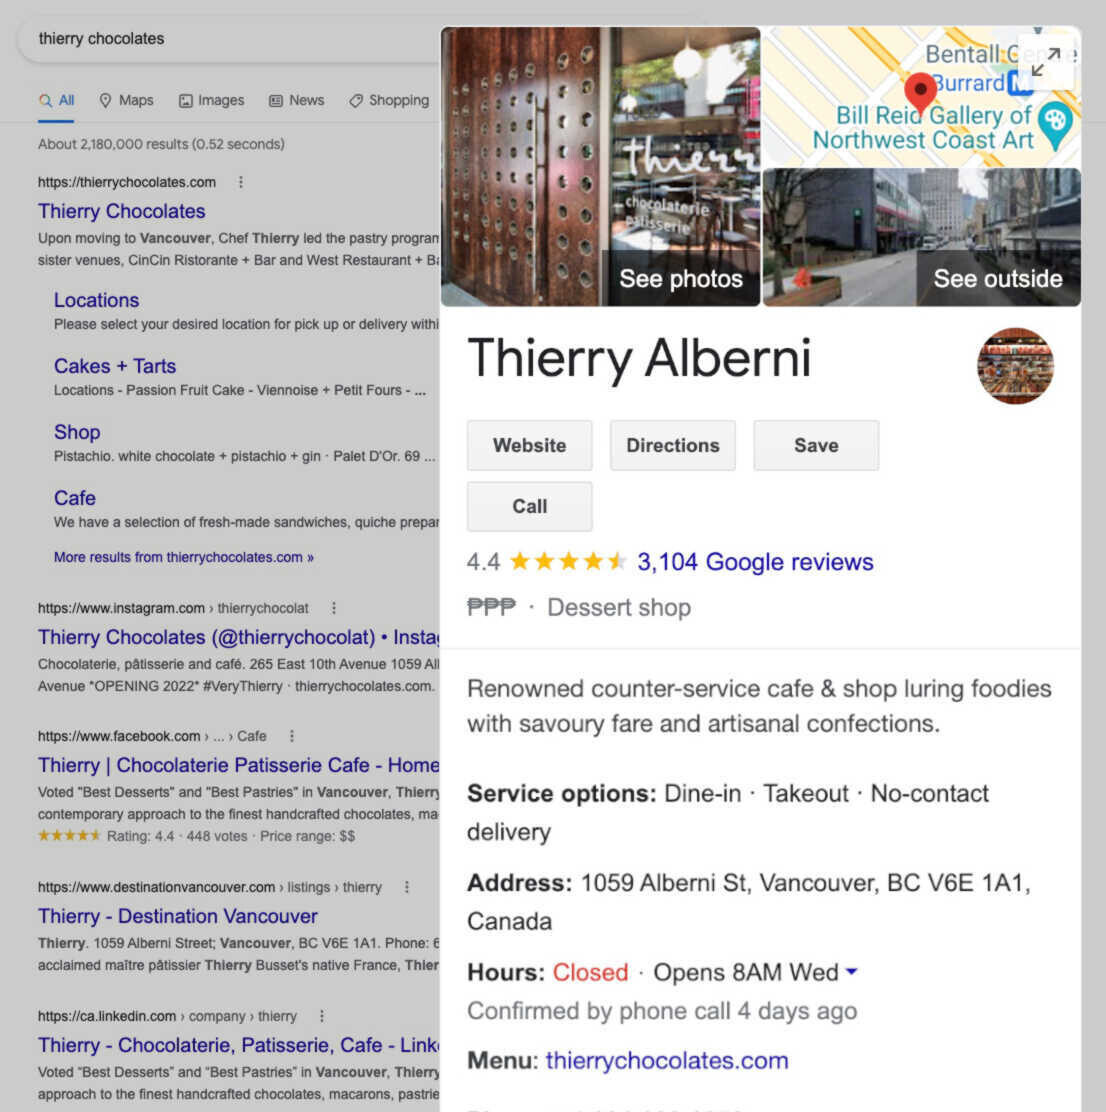 Thierry Alberni business profile